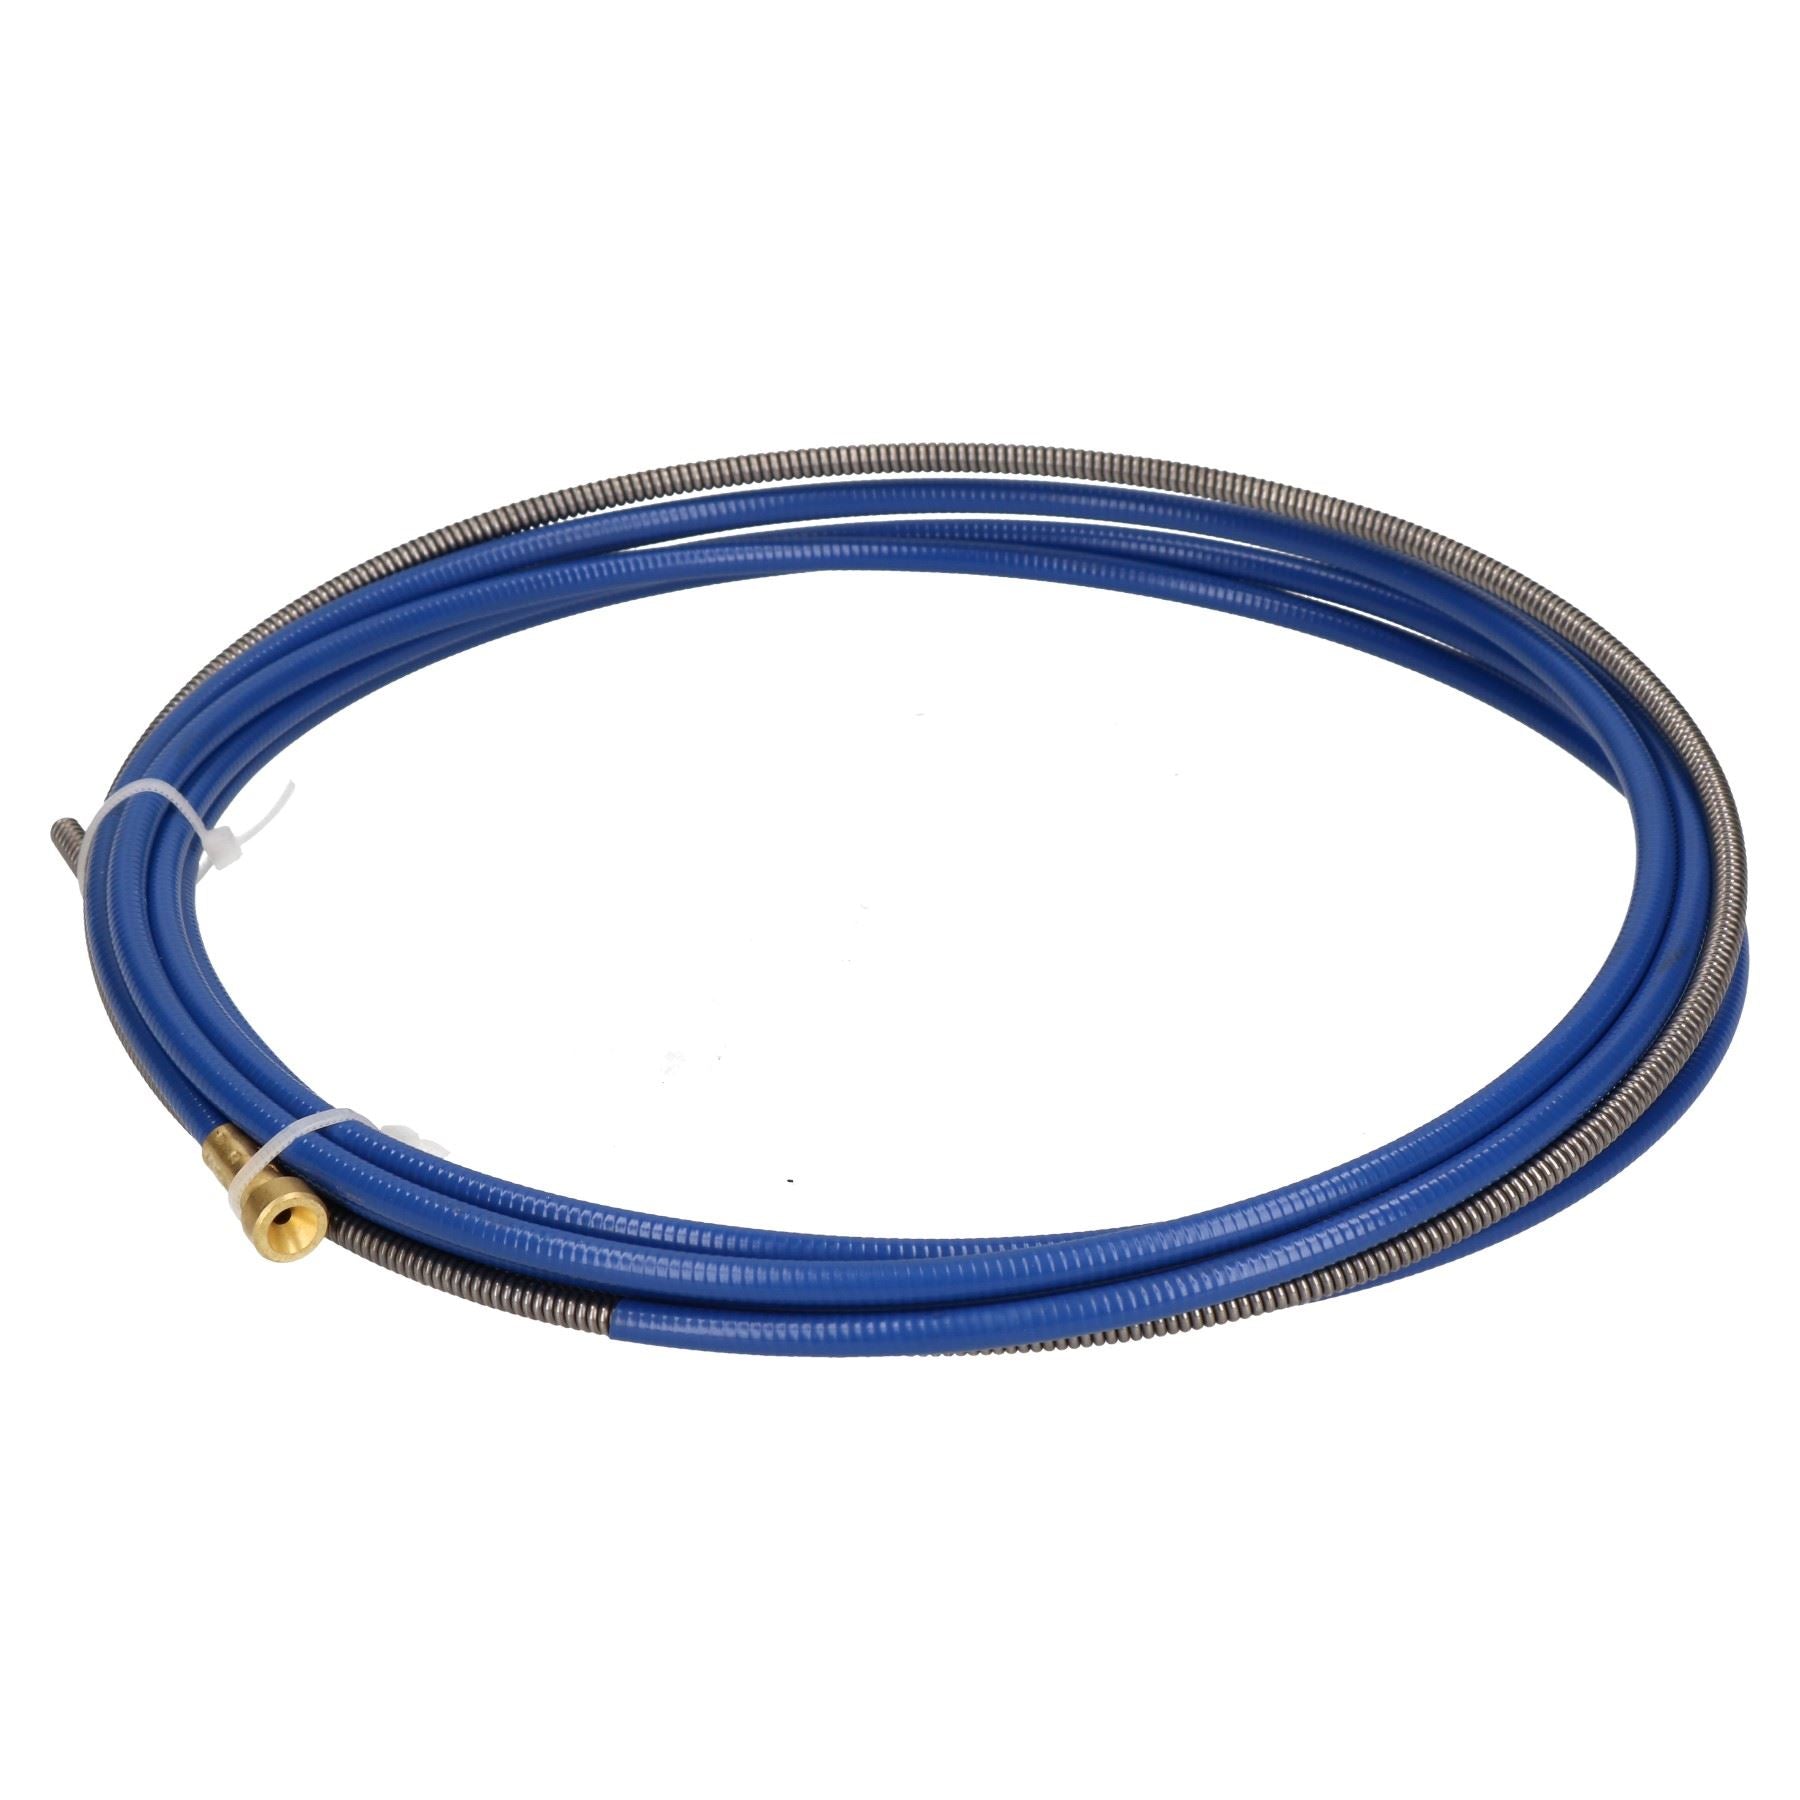 P.C. Liner Wire 0.6 - 0.9mm x 3M Welding Blue Steel Plastic Coated MIG Torch